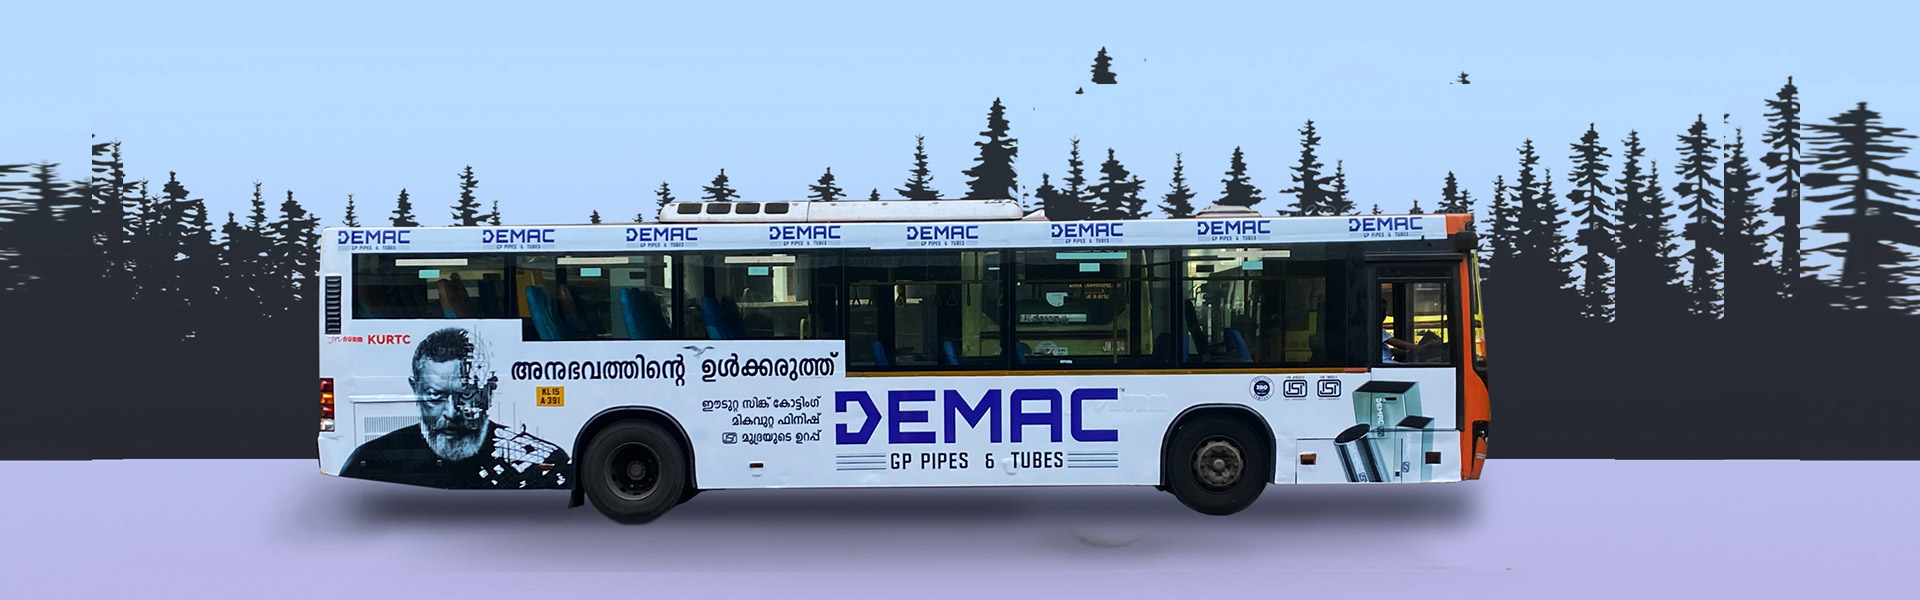 bus branding in kerala